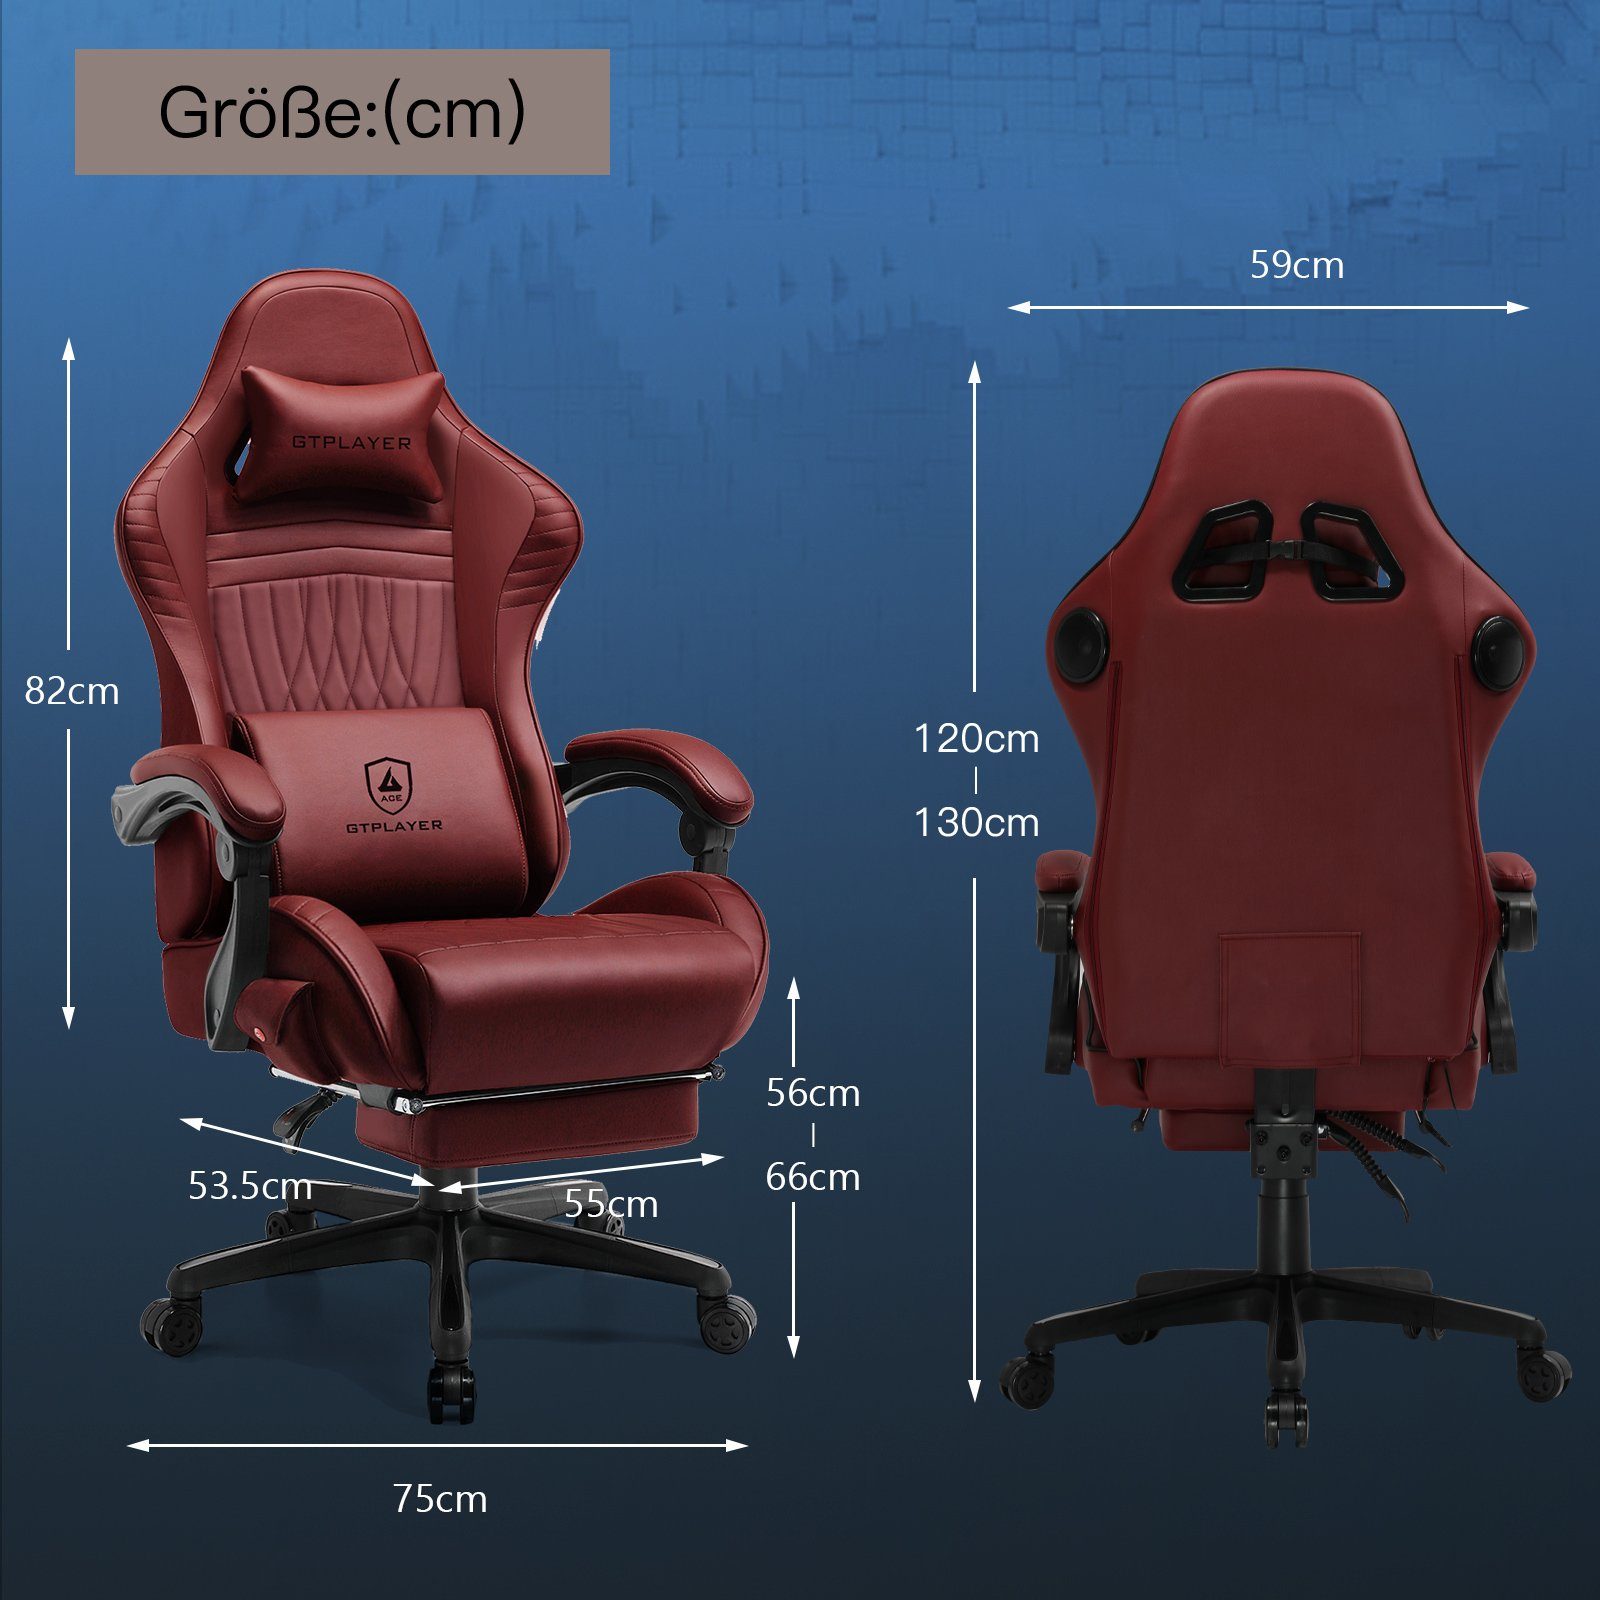 ergonomischer GTPLAYER Lautsprecher, HIFI Klang-atmosphäre Rotwein Gaming-Stuhl mit beeindrukende Stereo Verbindungsarmlehen Bürostuhl